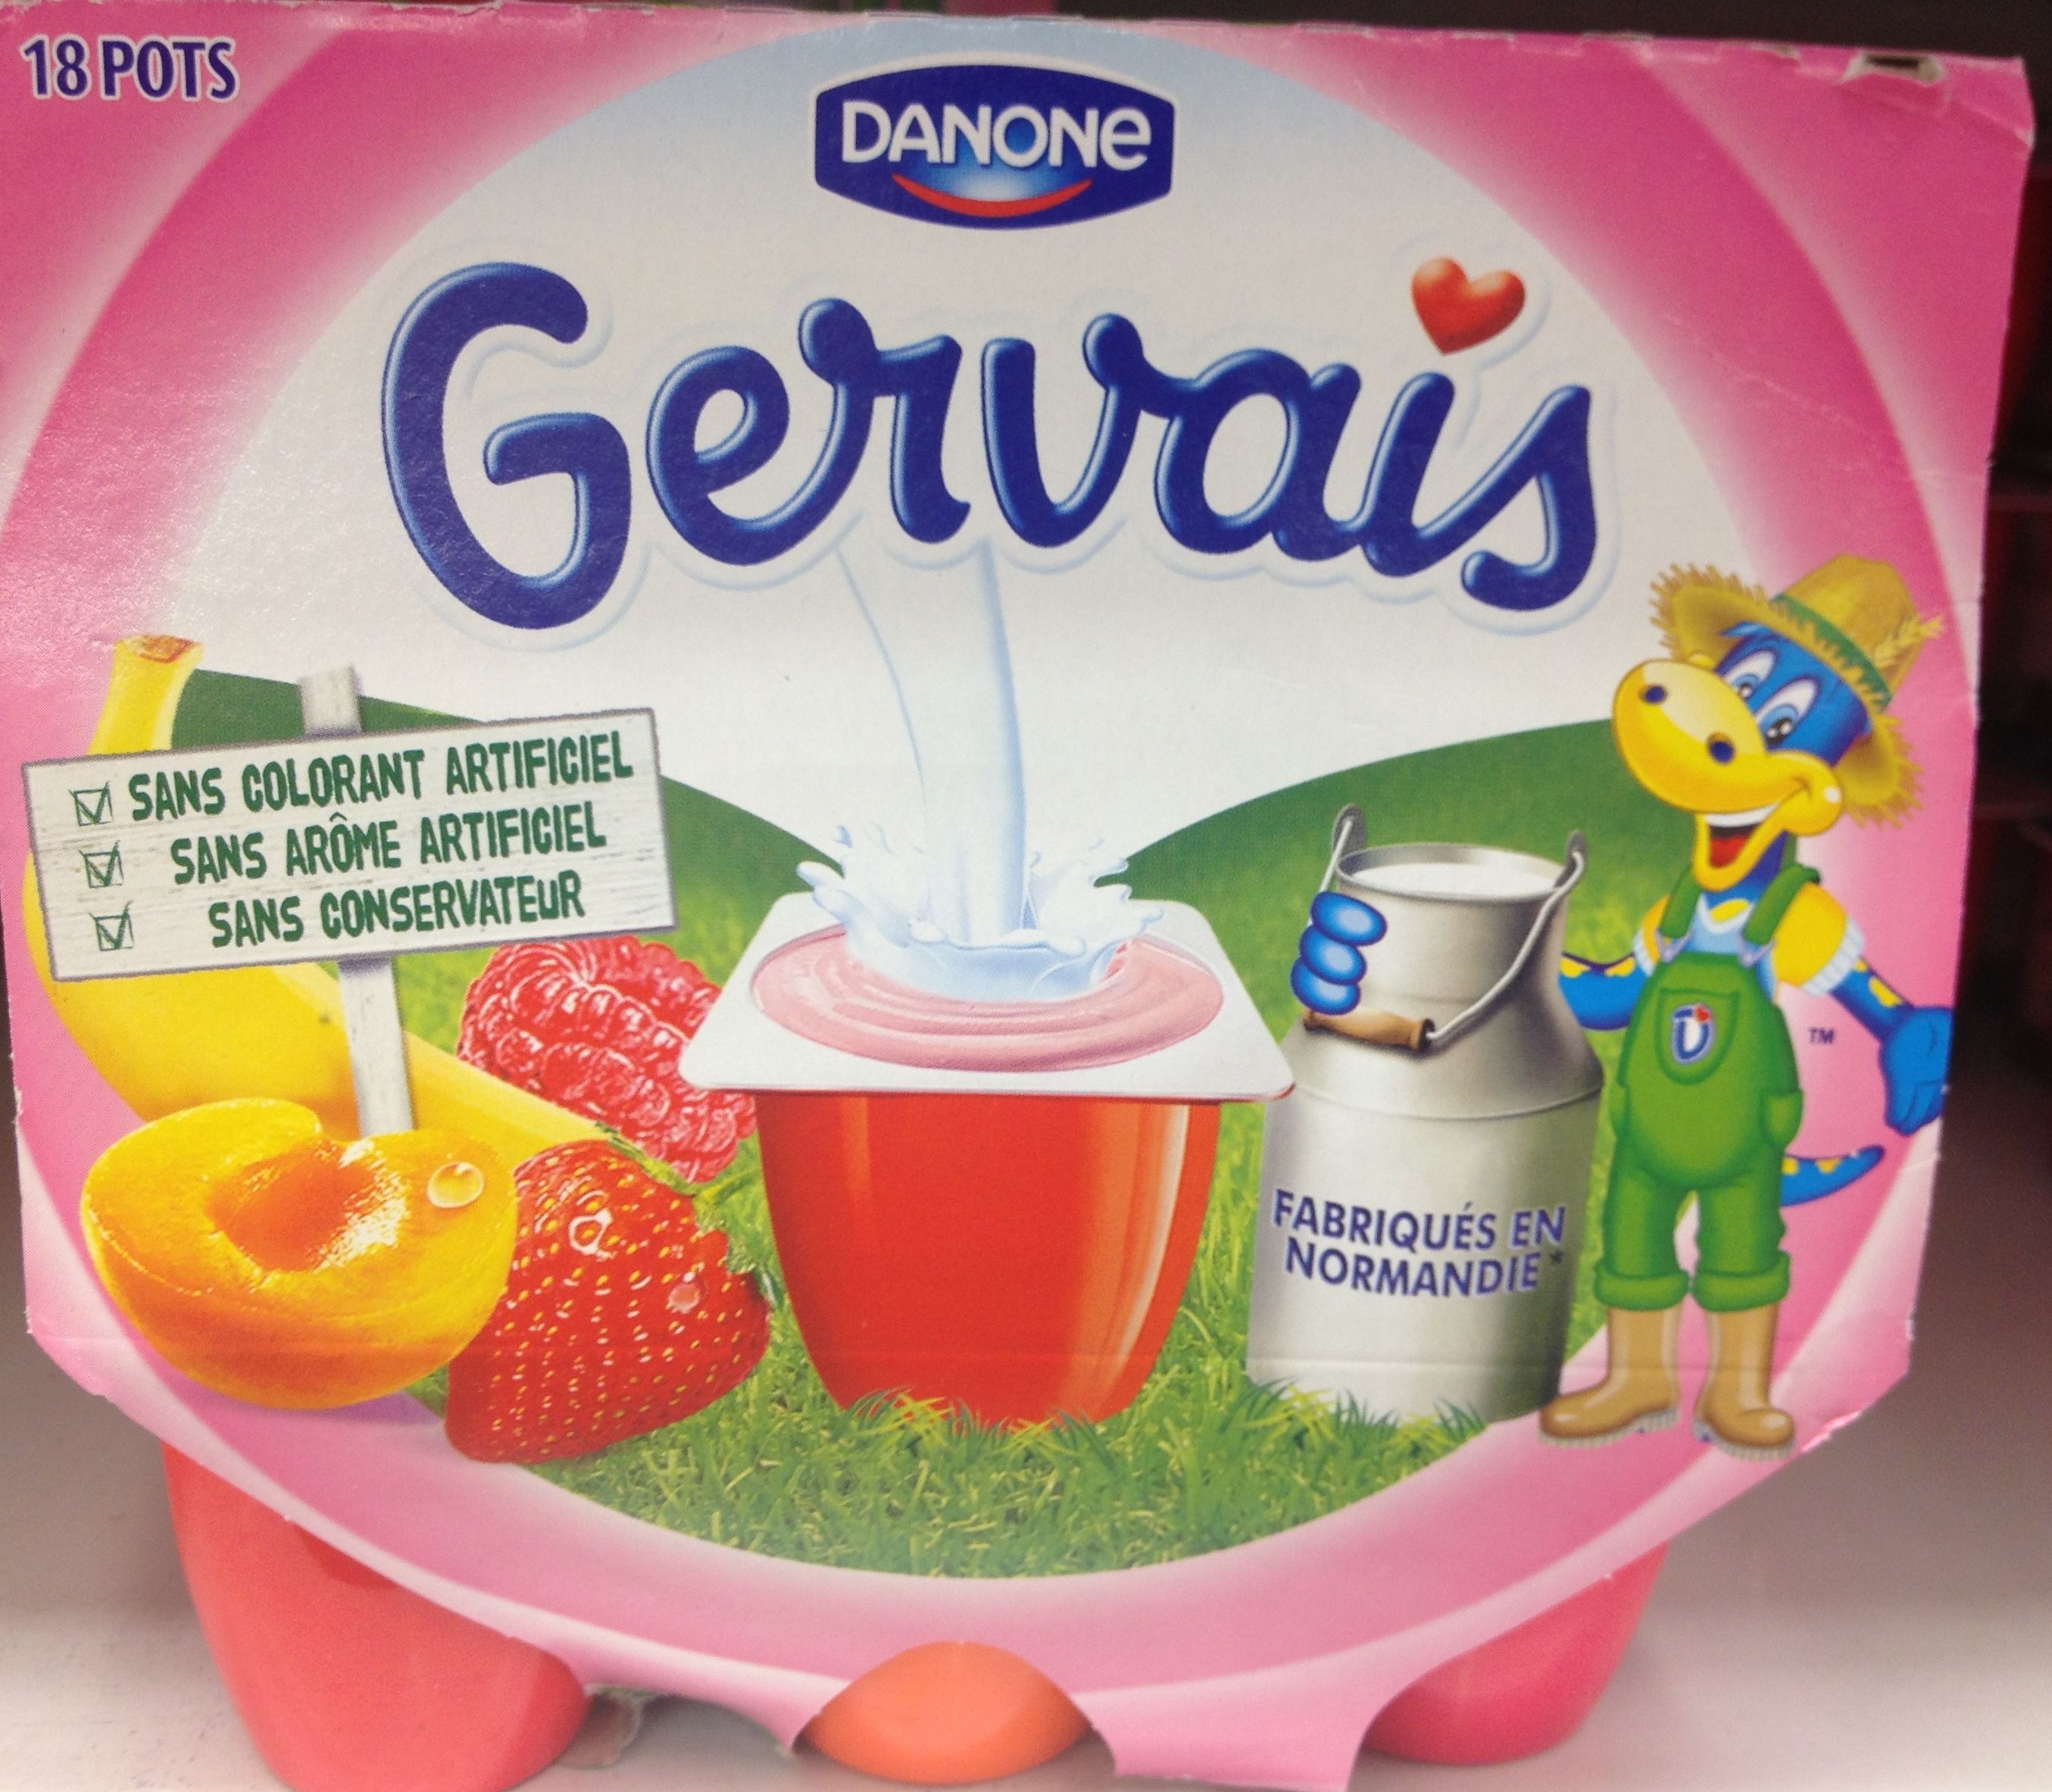 Gervais (Fraise, Framboise, Abricot, Pêche, Banane) - (2 % MG) 18 Pots - Prodotto - fr